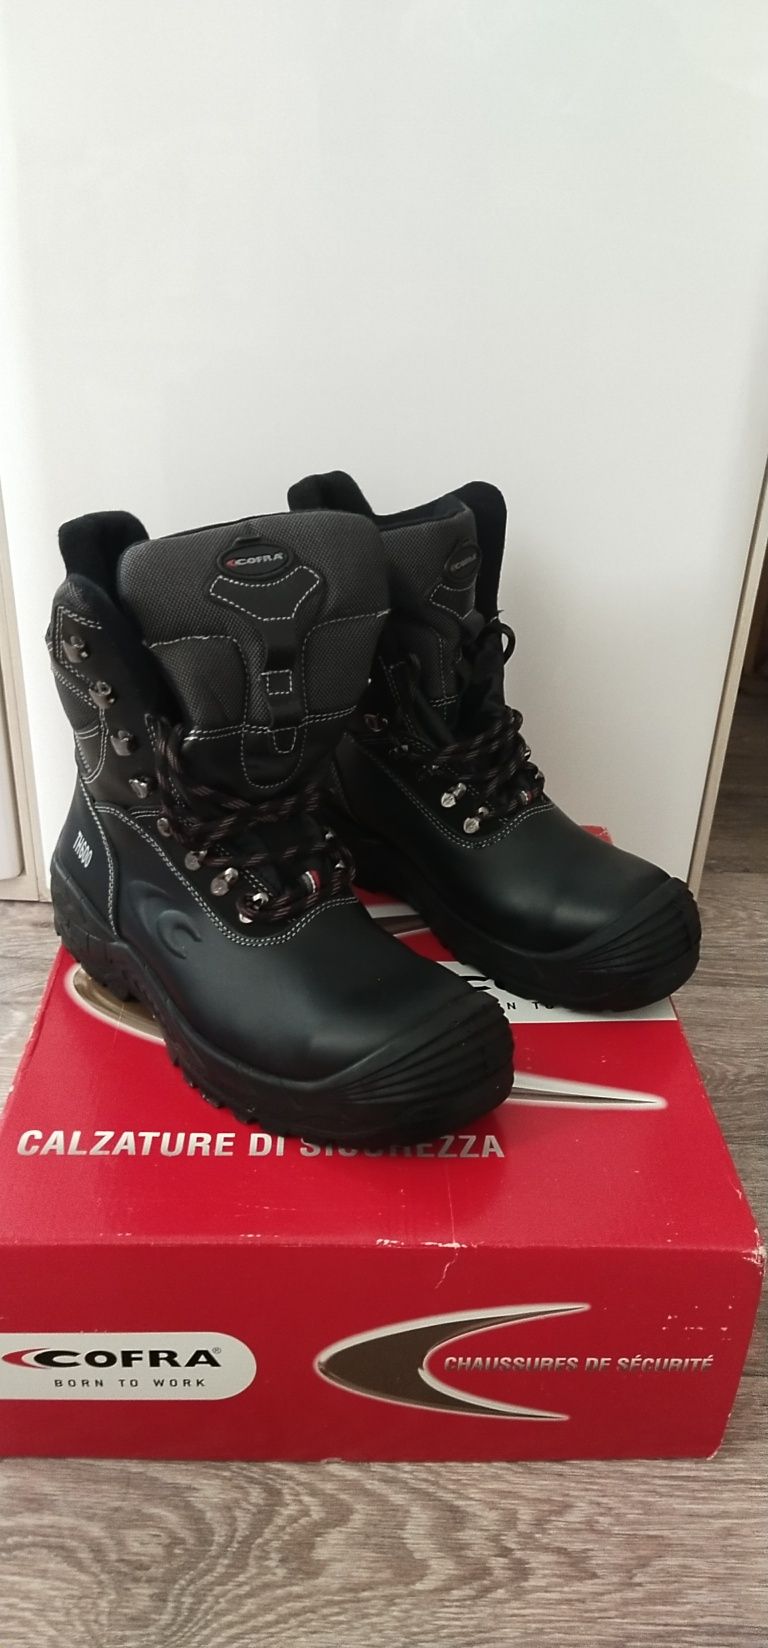 Спецобувь/Safety boots размер 41